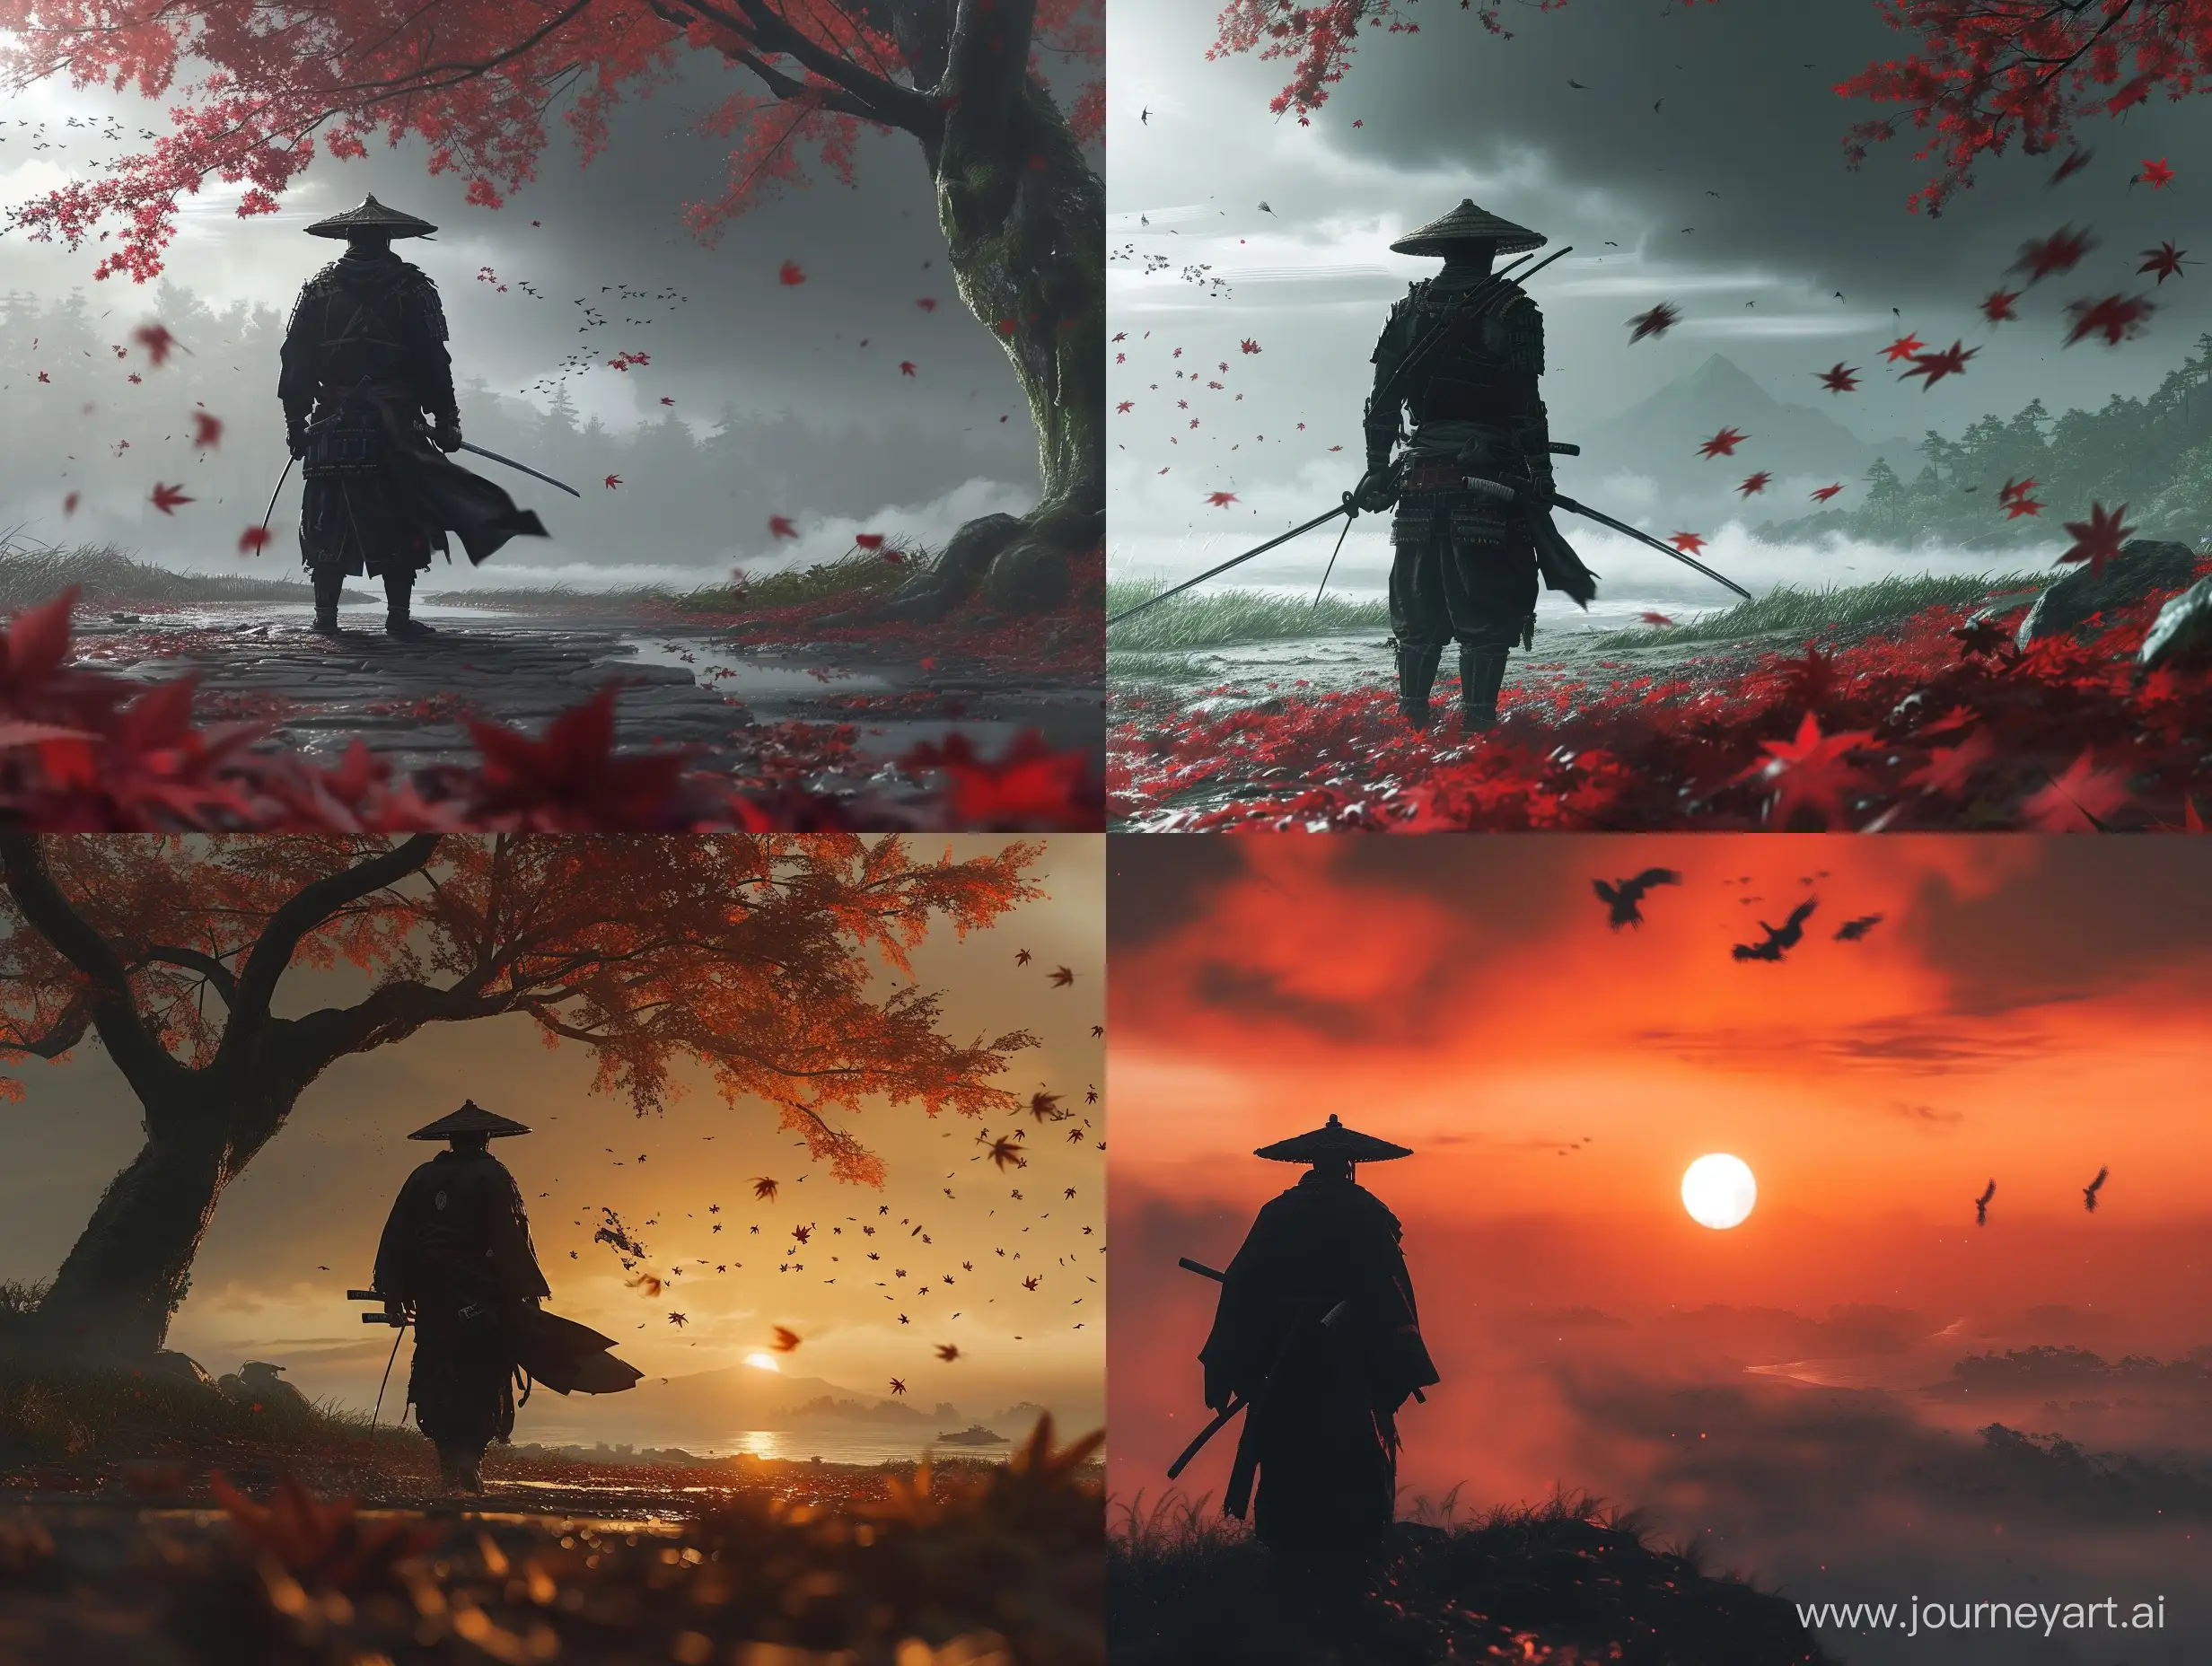 Samurai-Duel-in-Haunting-Scenery-Ghost-of-Tsushima-Art